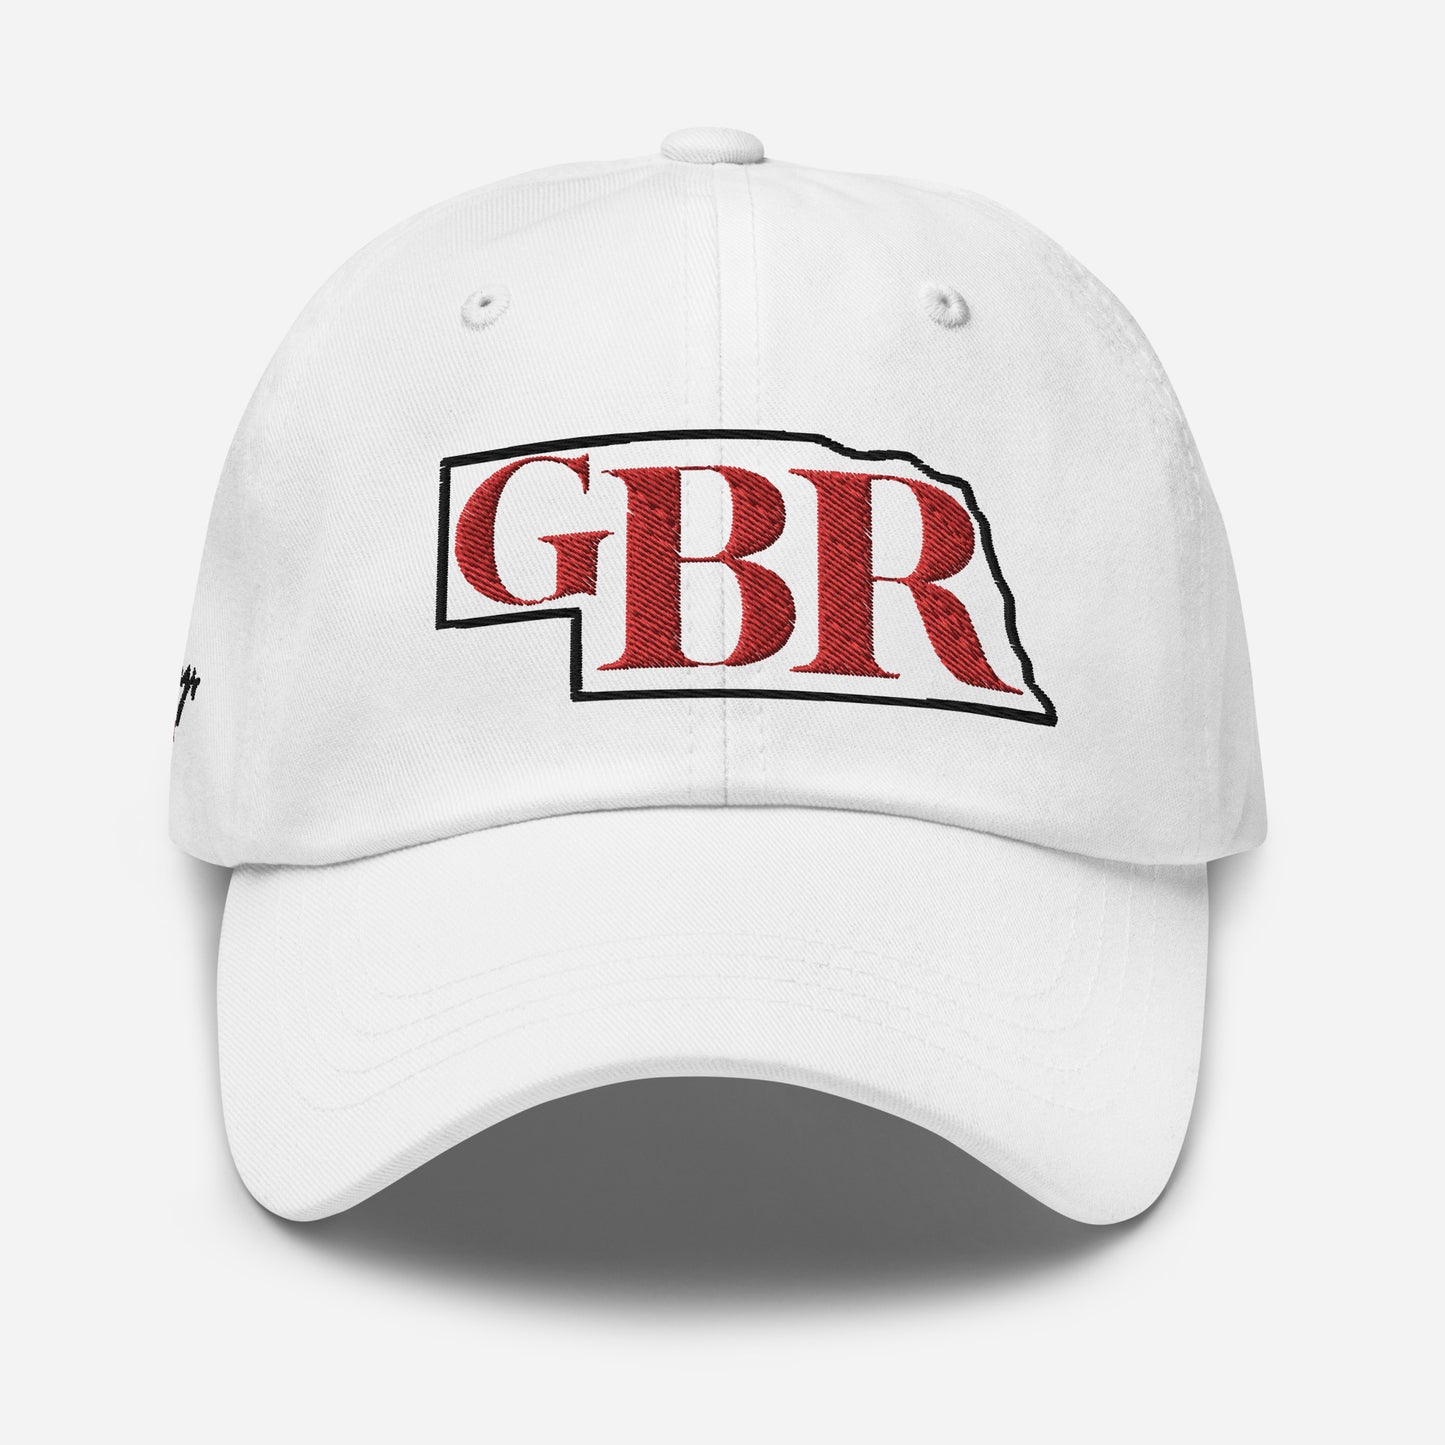 GBR Dad hat